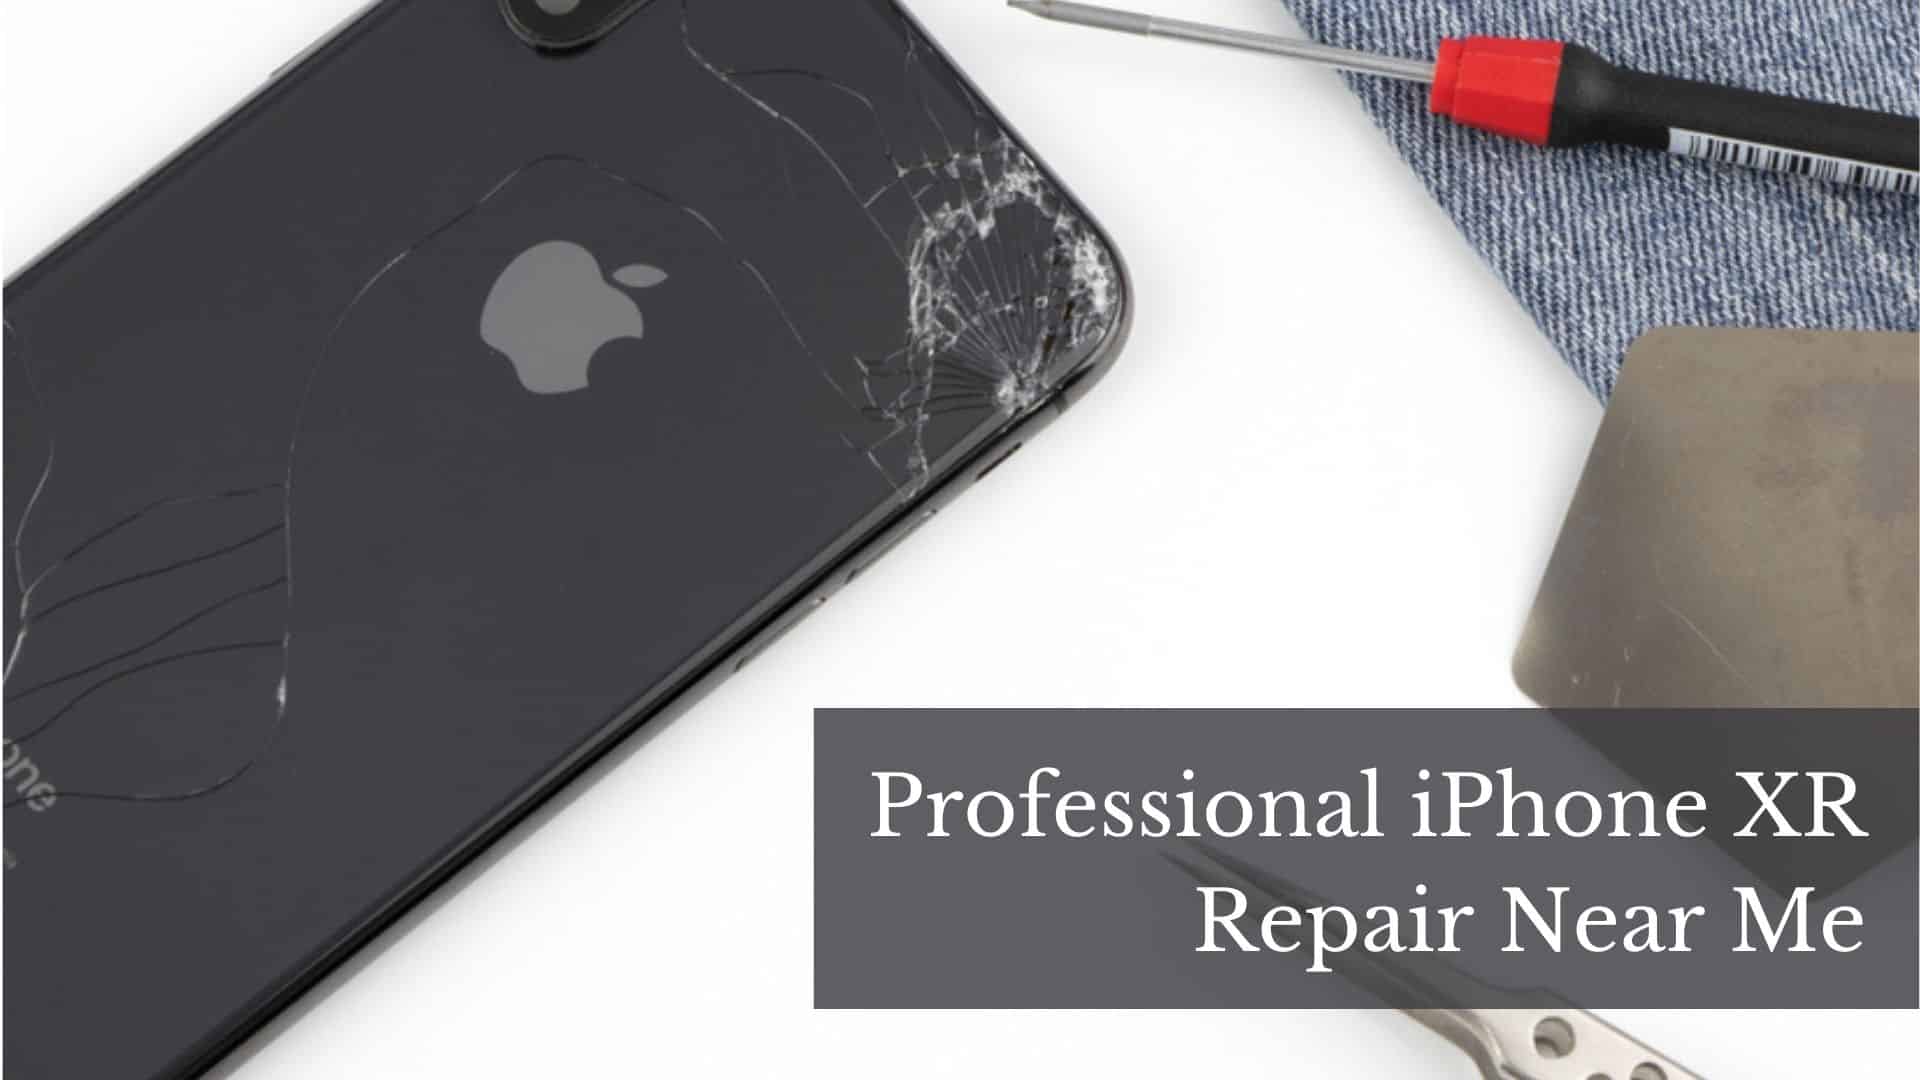 Professional iPhone XR Repair Near Me